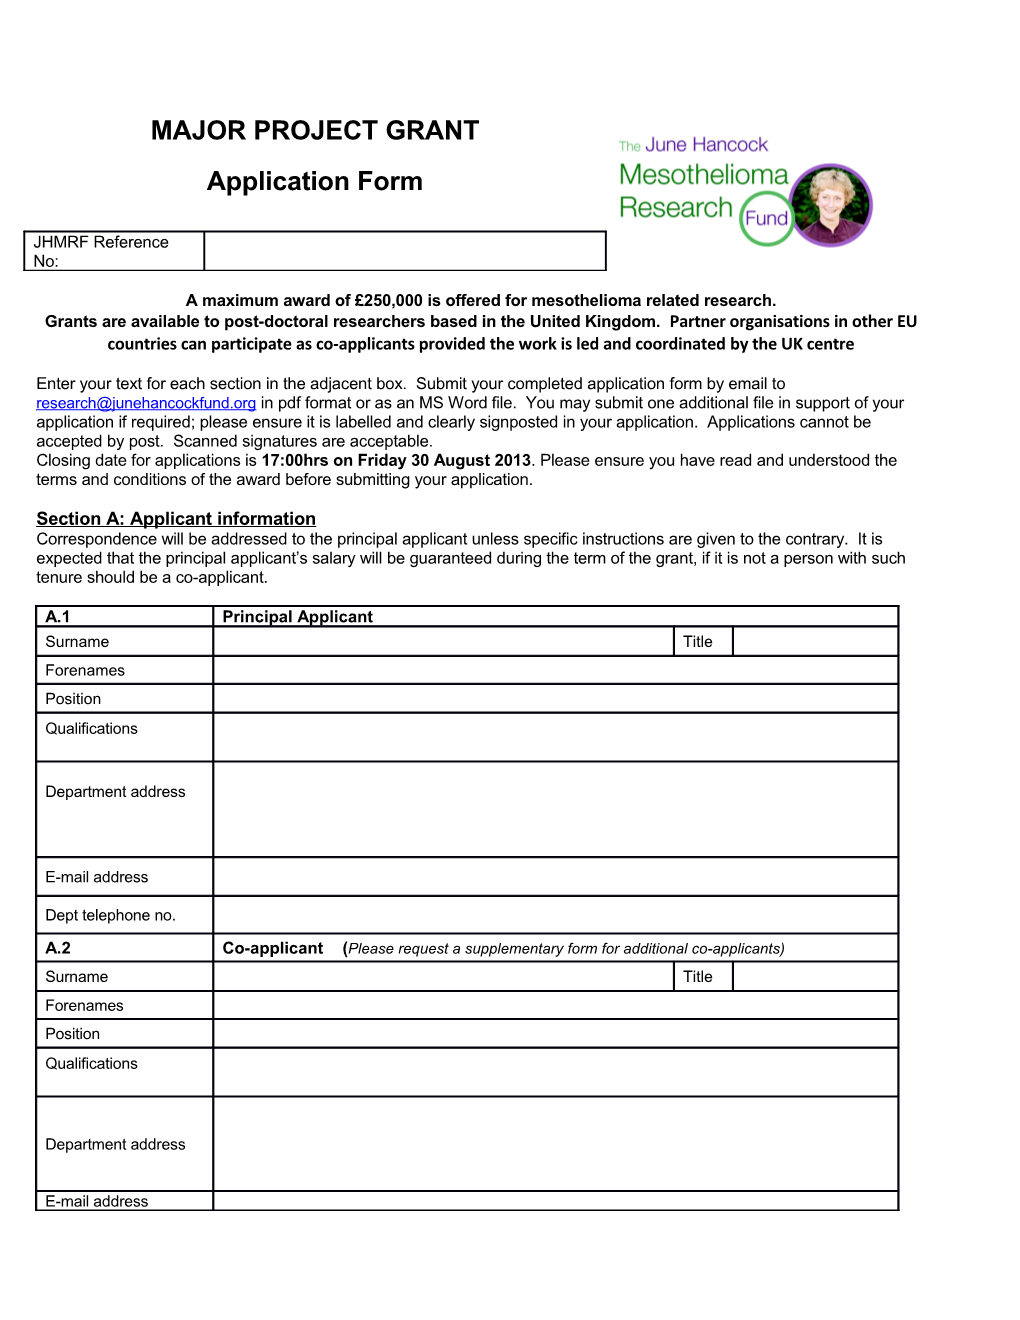 JHMRF Application Form: Major Project Grant